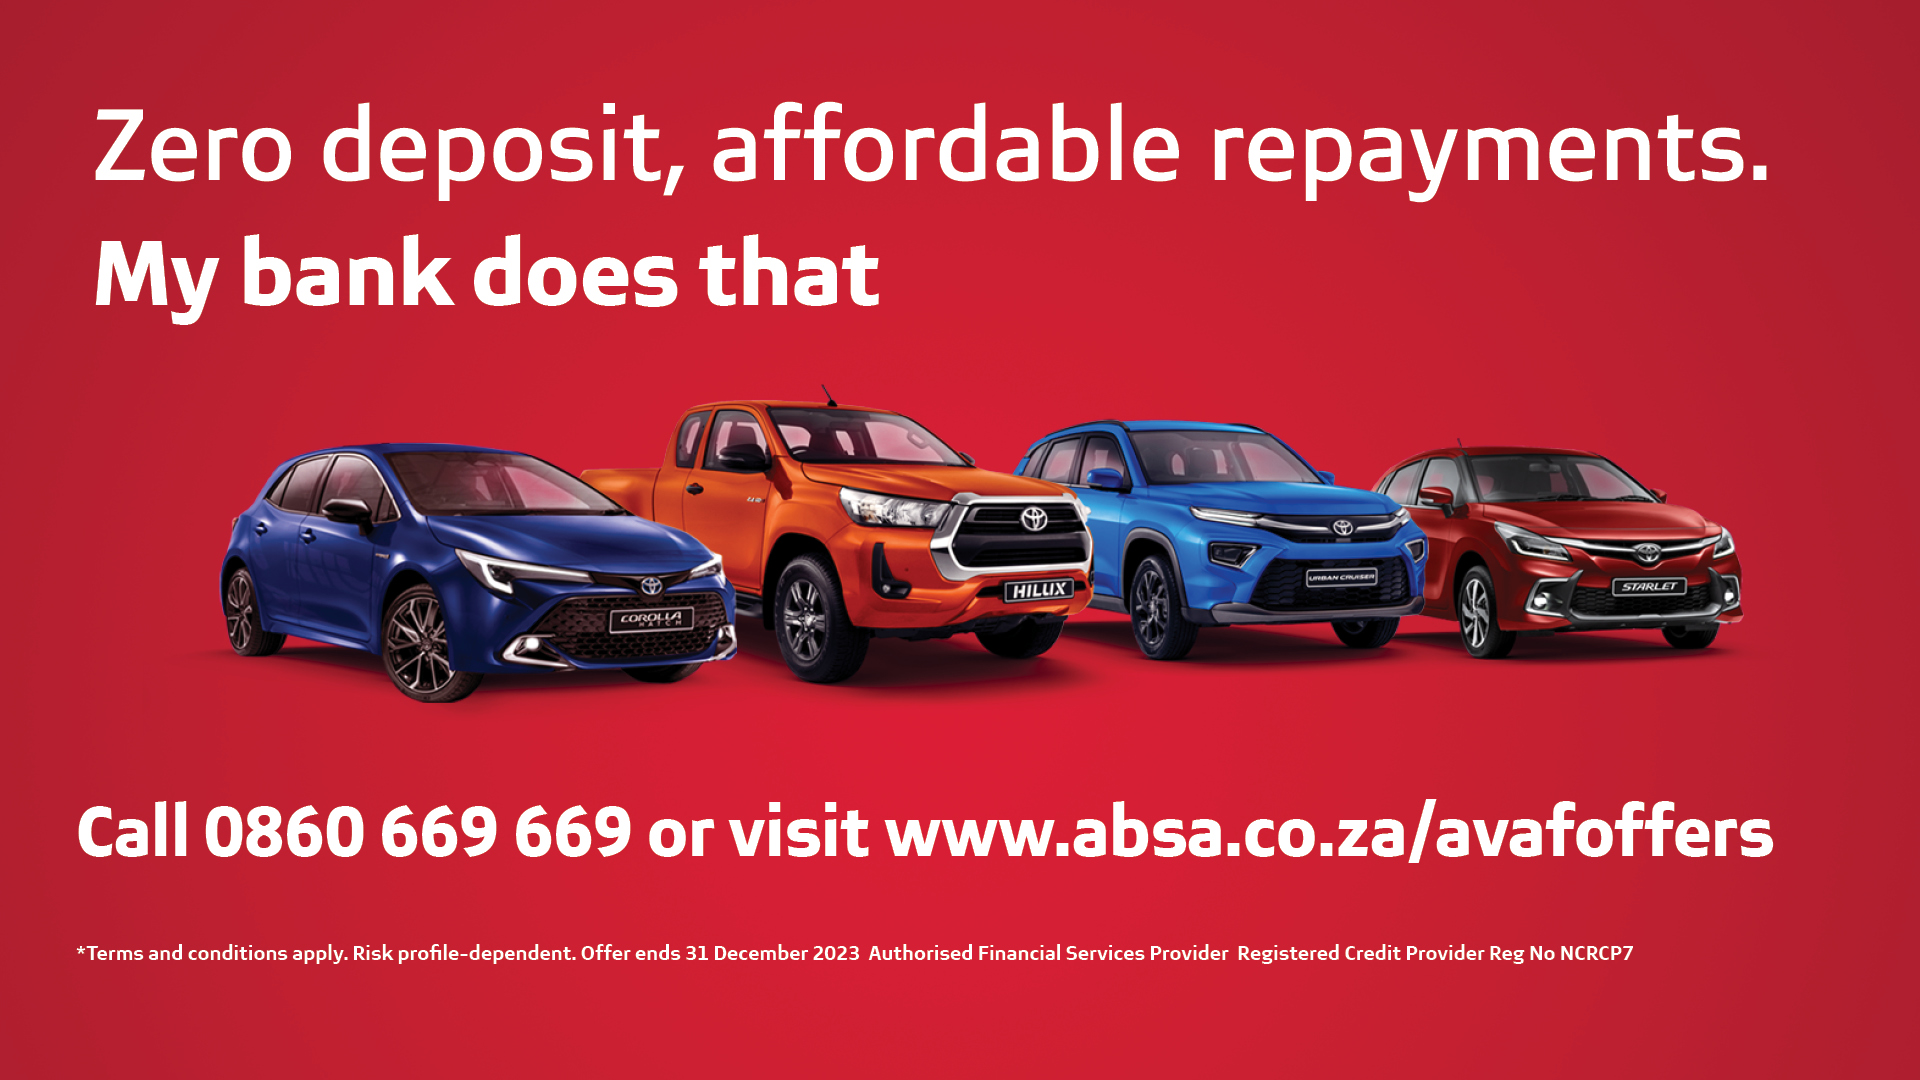 ABSA Vehicle Finance payment arrangements